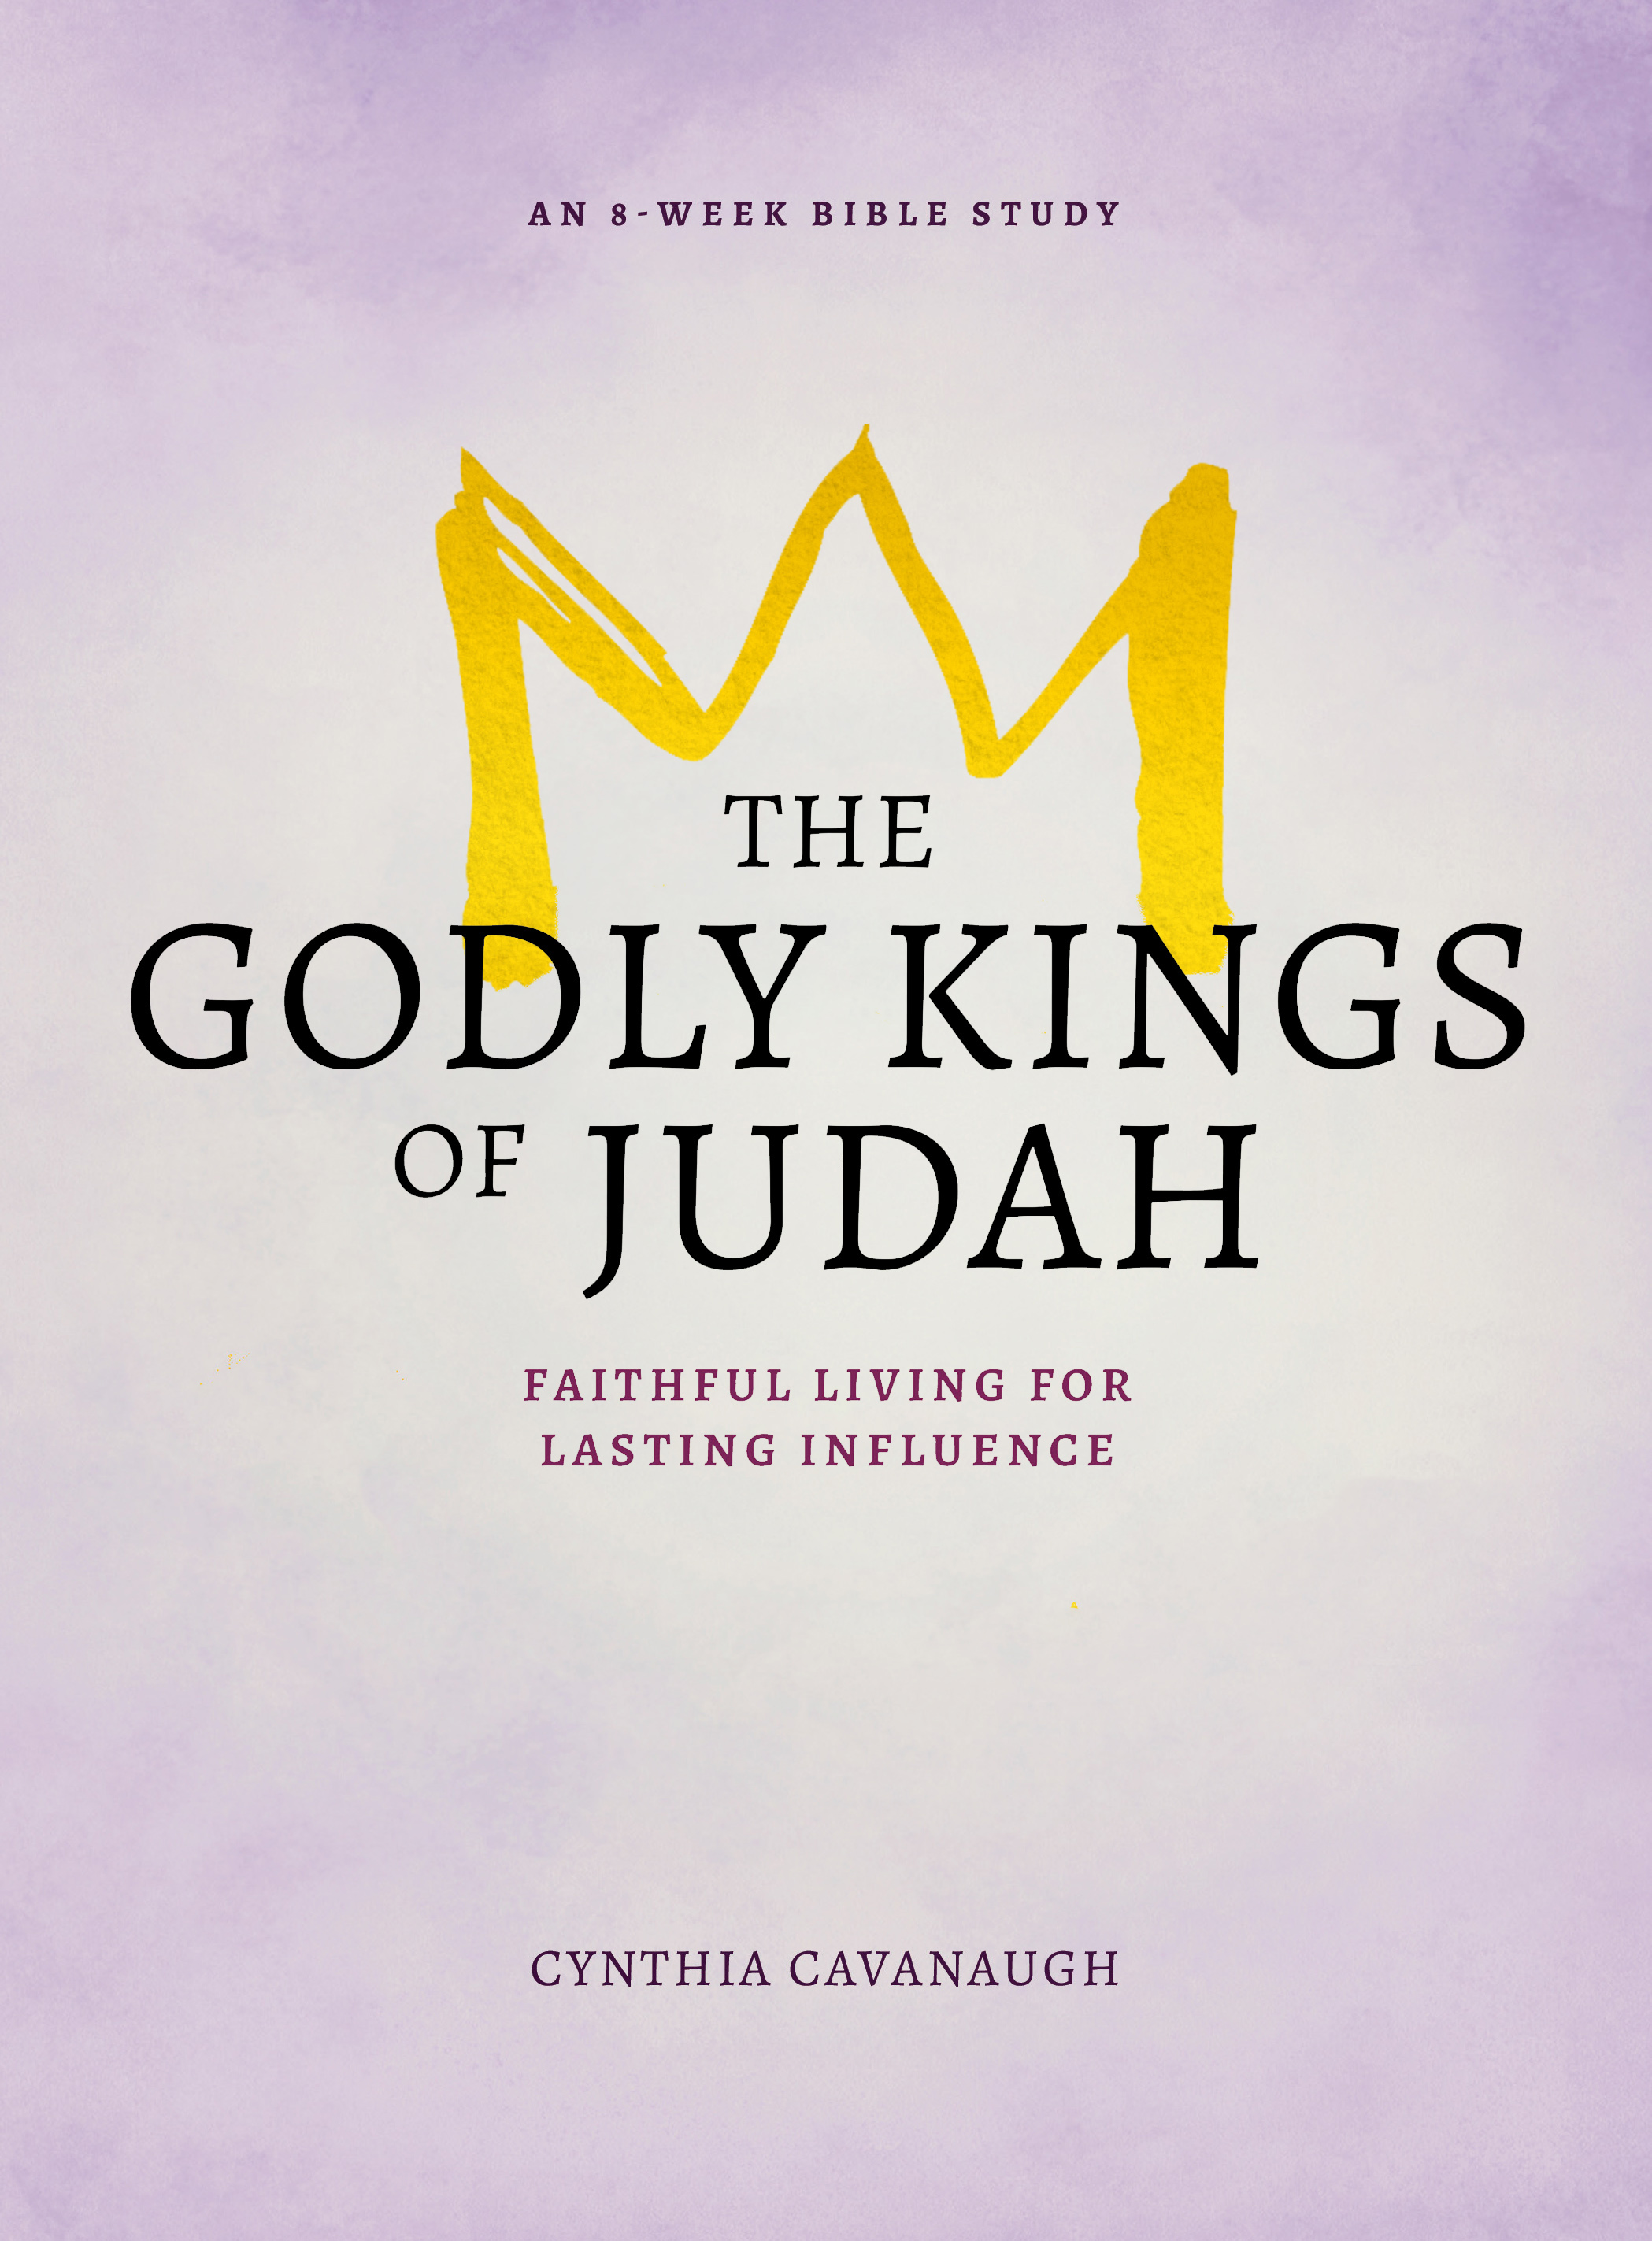 The　Study)　Week　Godly　(8　Kings　of　Lasting　Bible　Judah:　Faithful　Living　For　Influence　Koorong